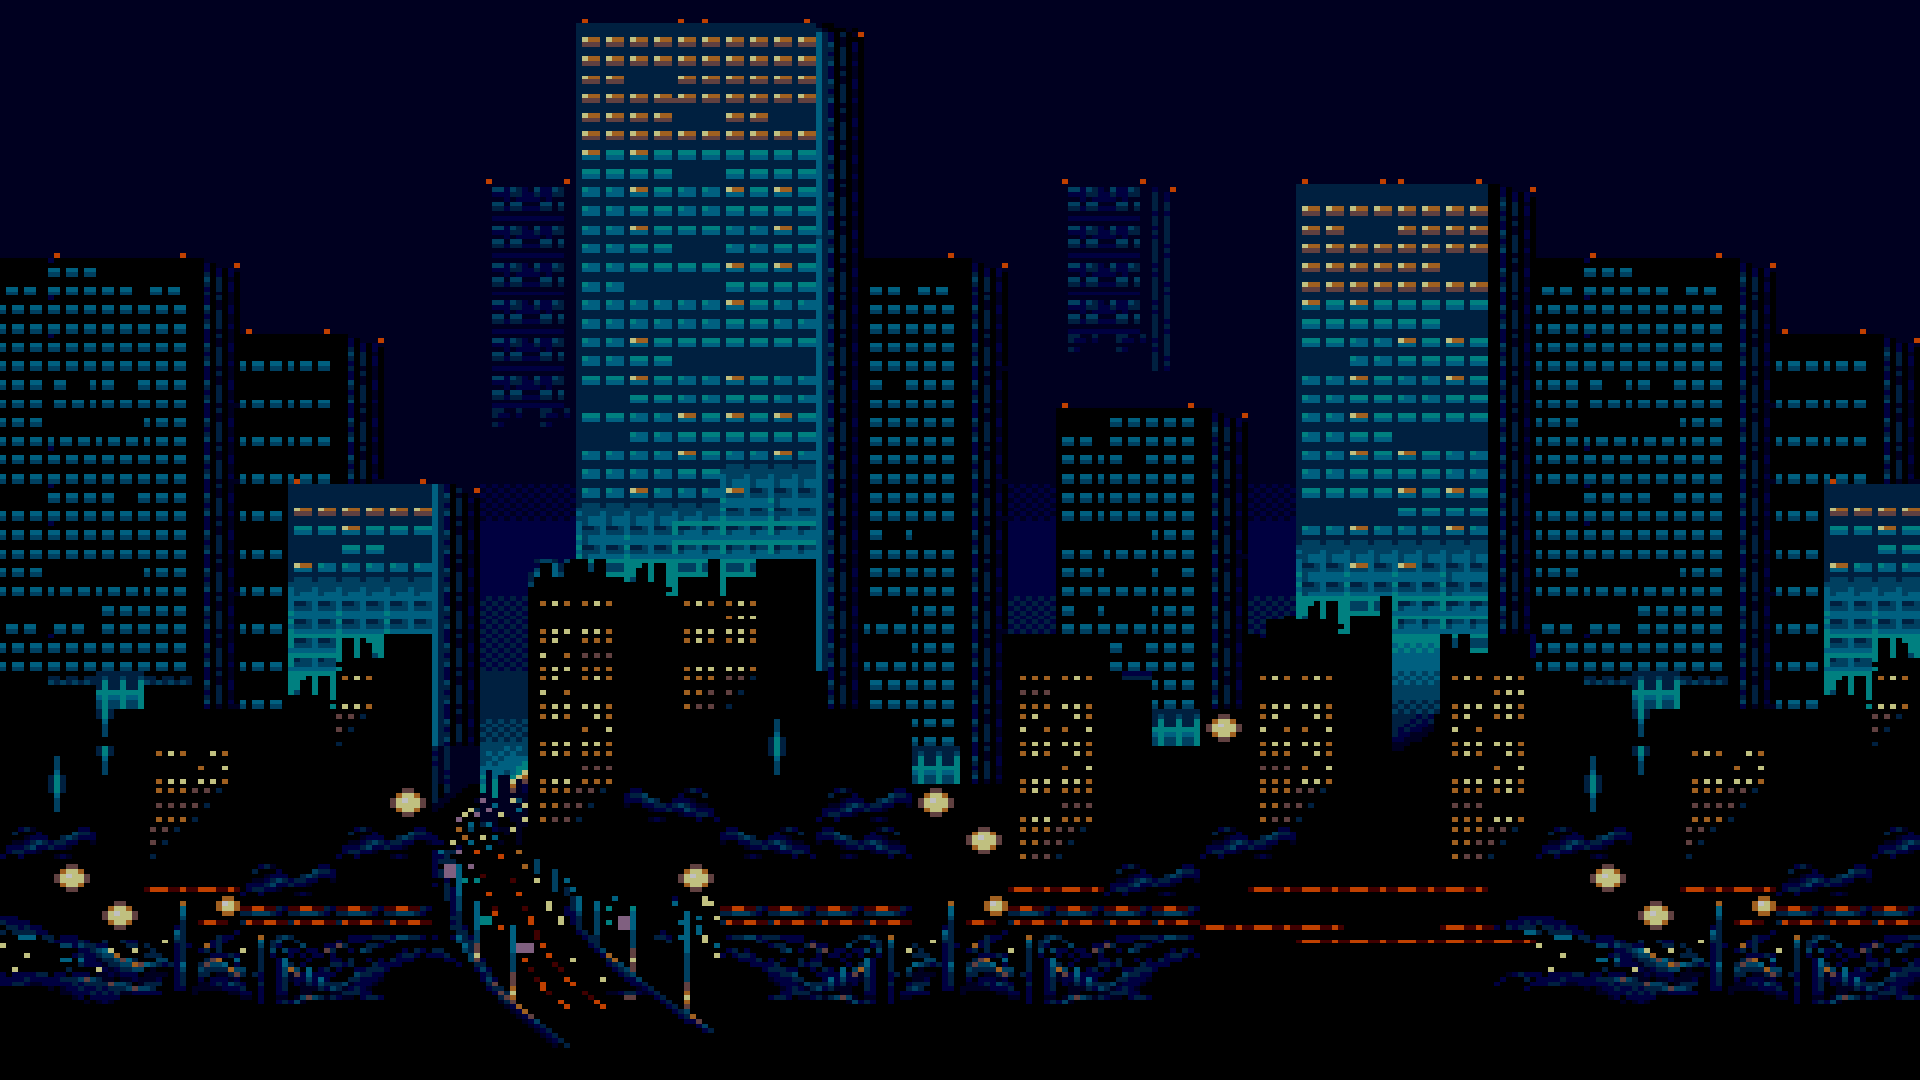 Pixel city at night 1920 × 1080